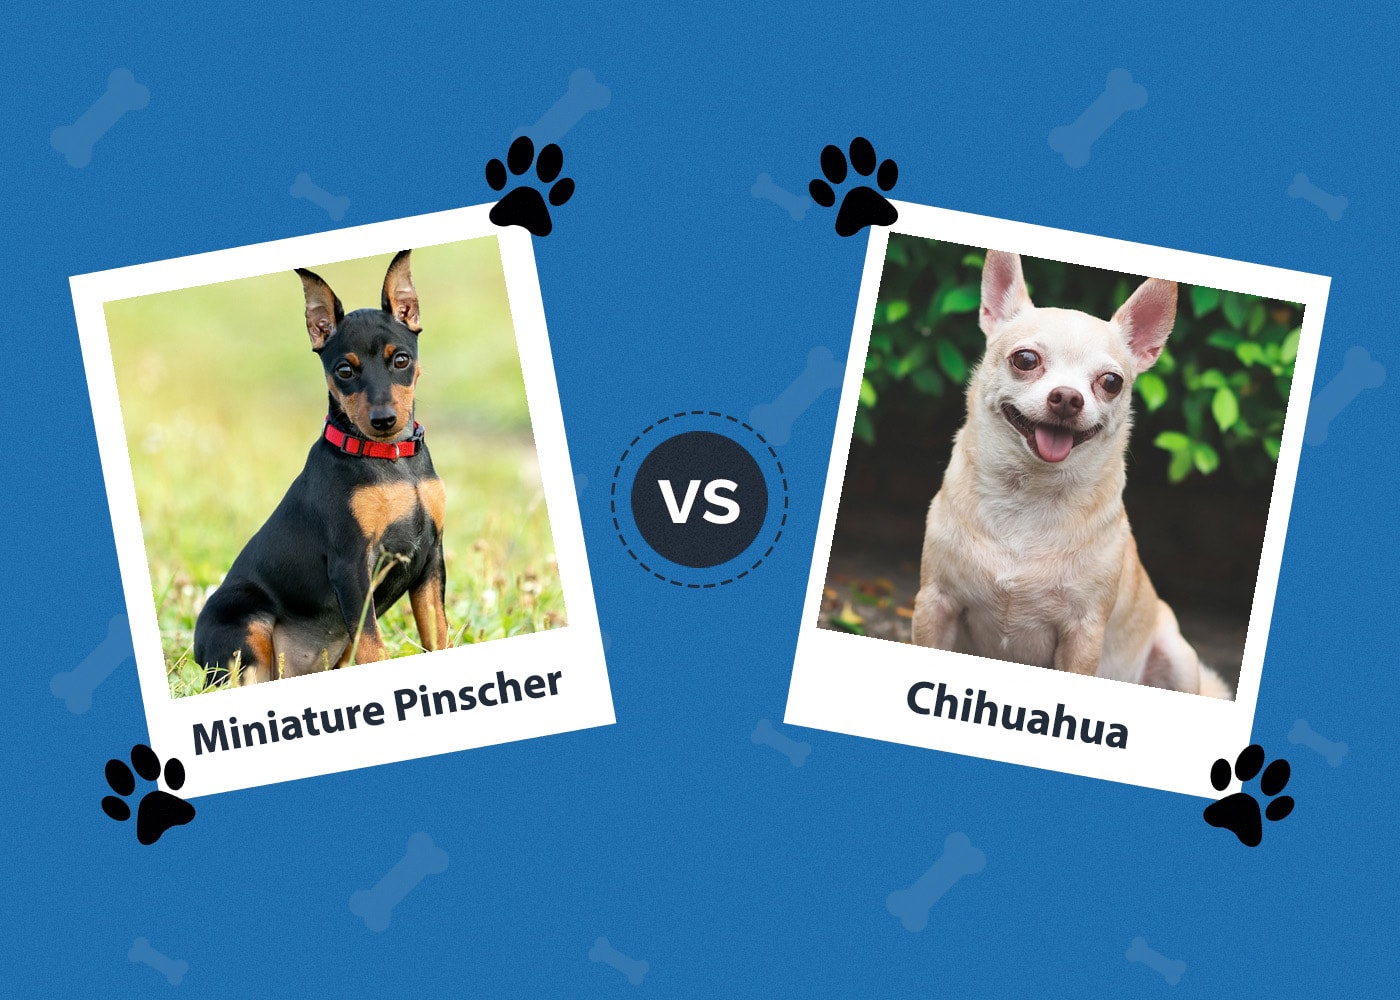 Miniature Pinscher vs. Chihuahua